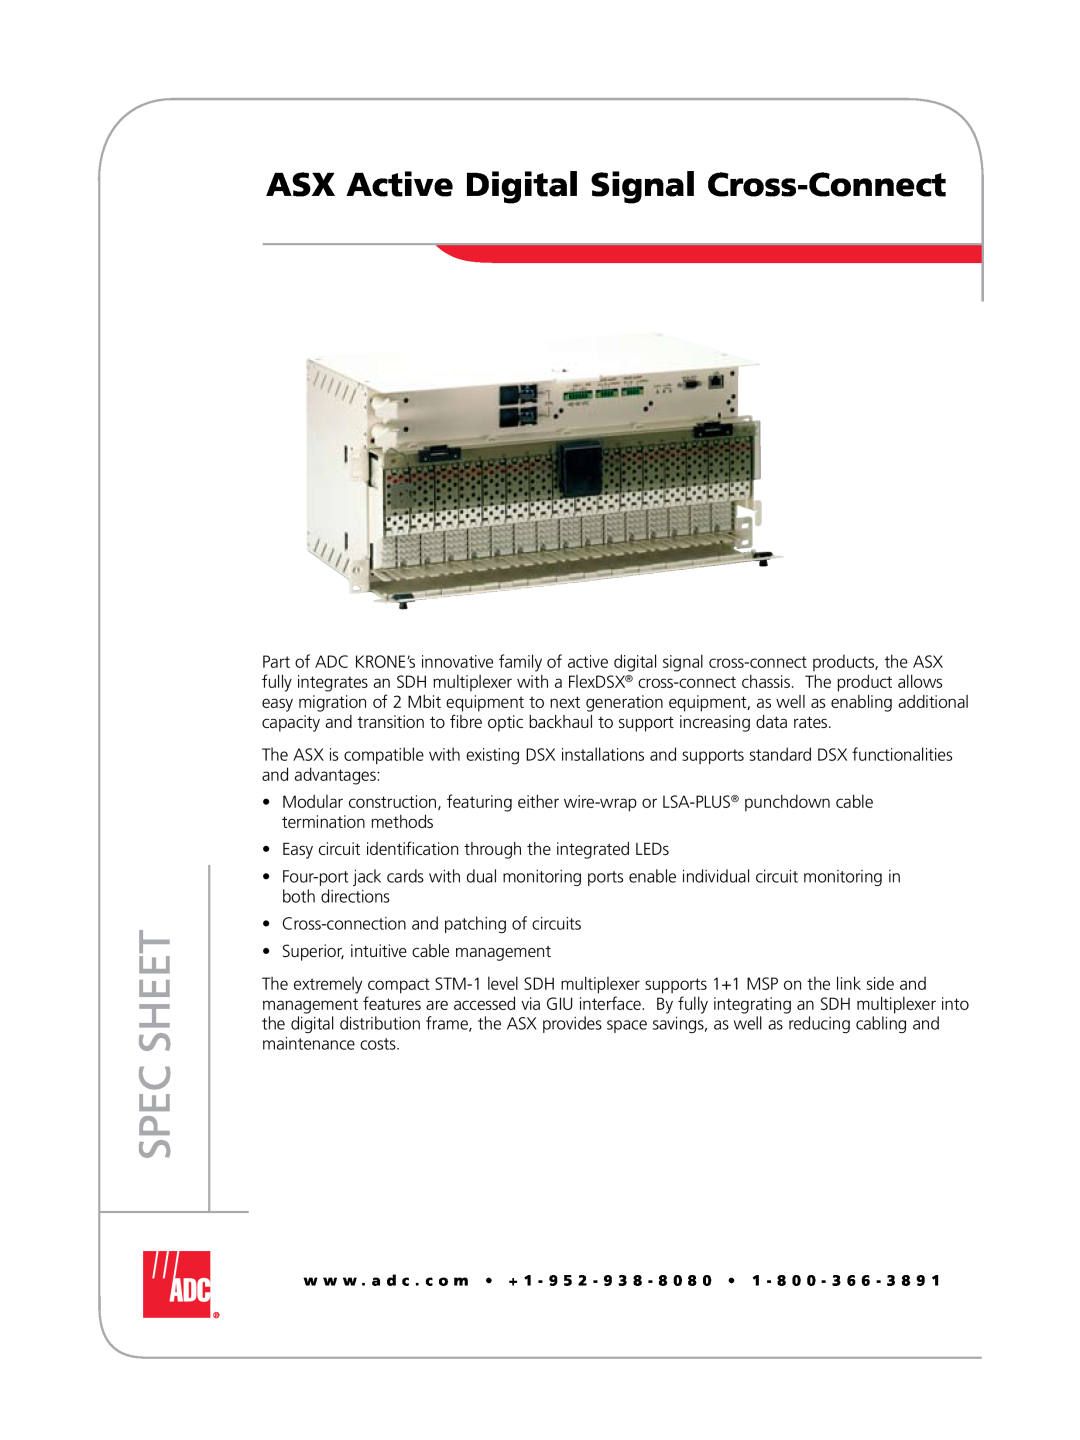 ADC manual ASX Active Digital Signal Cross-Connect, Spec Sheet 